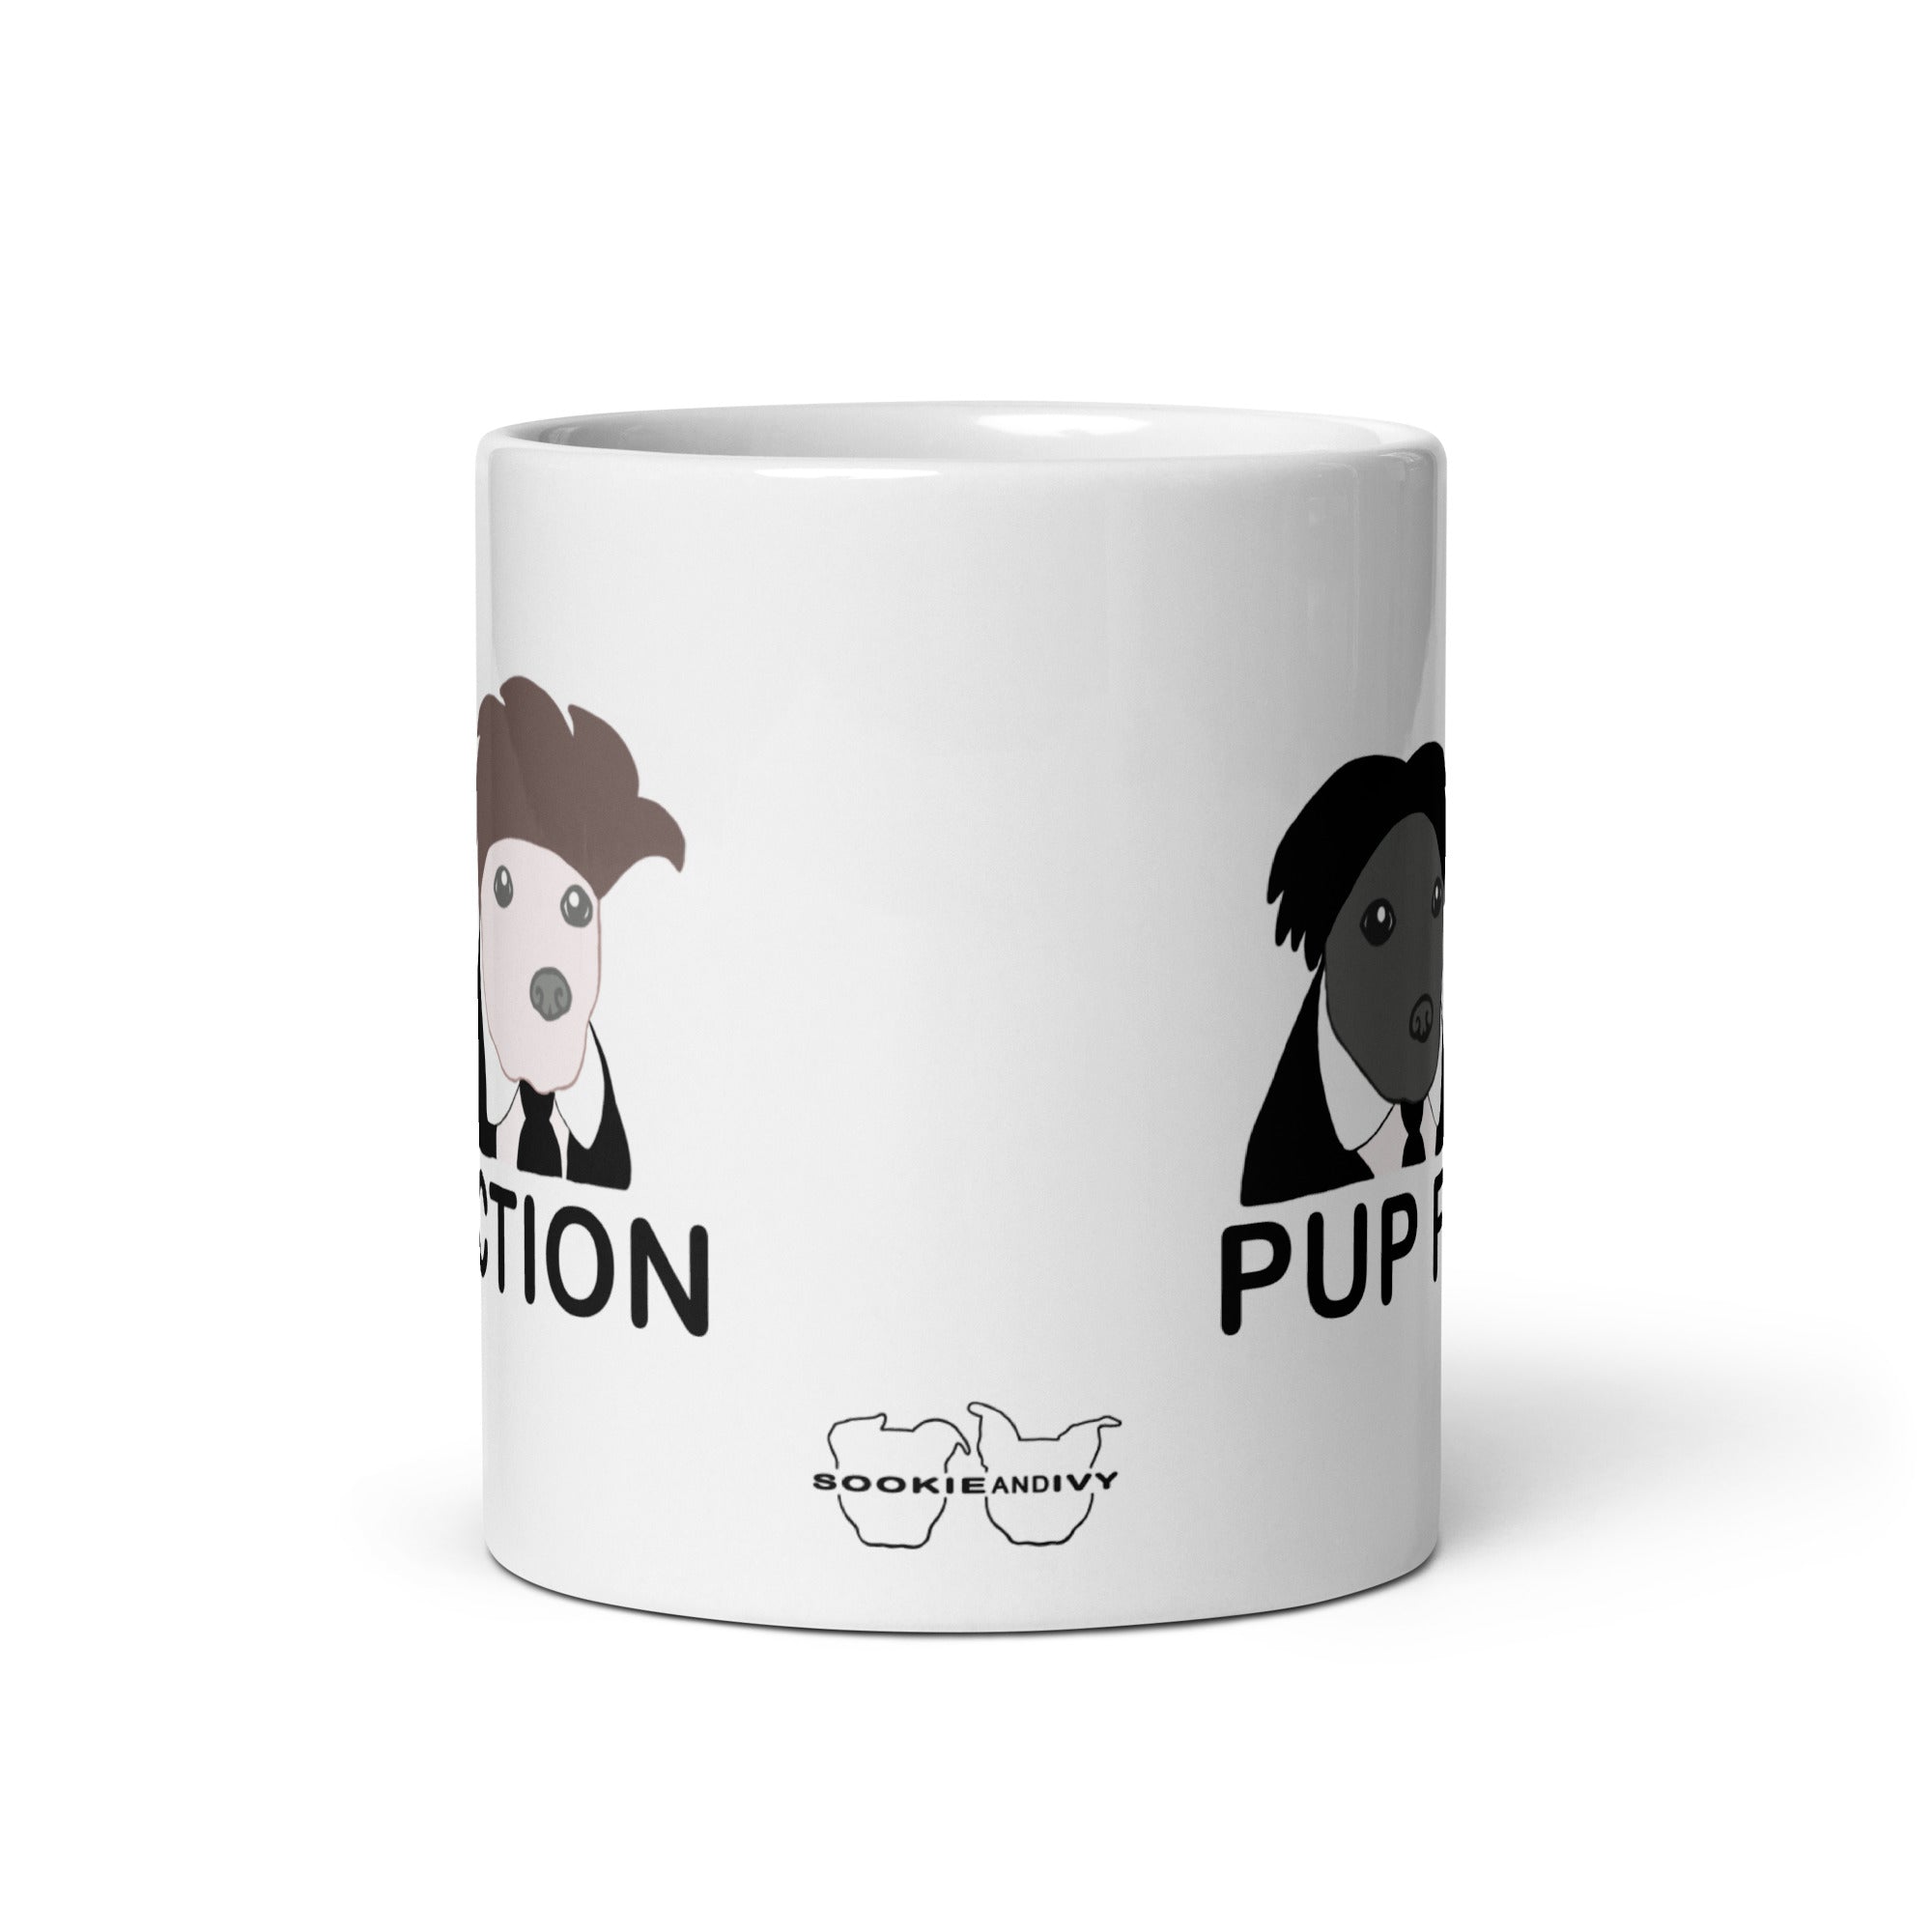 "Pup Fiction" White glossy mug